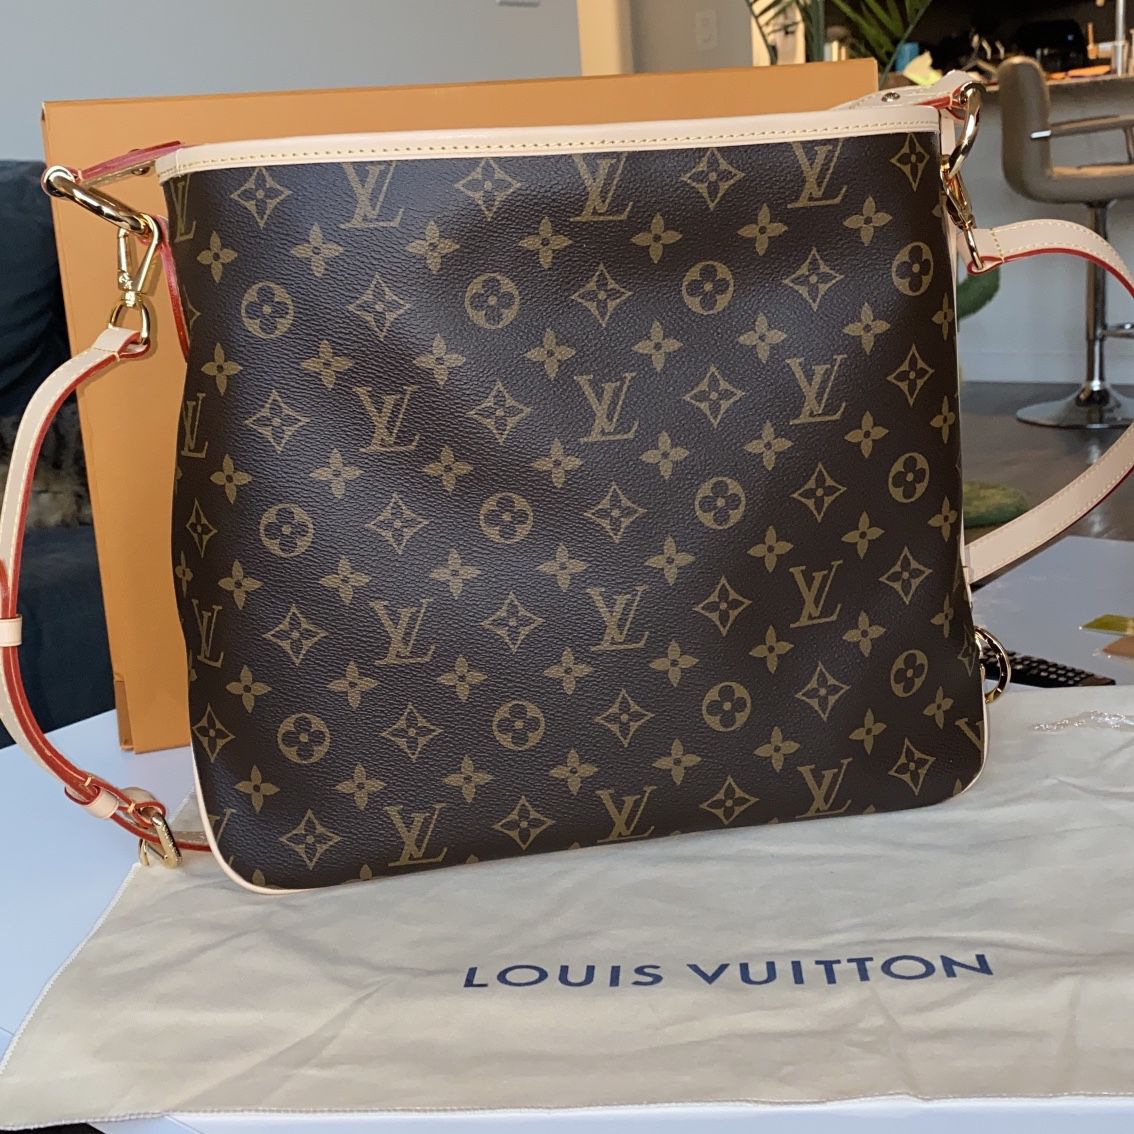 Louis Vuitton Delightful Mm for Sale in Clovis, CA - OfferUp